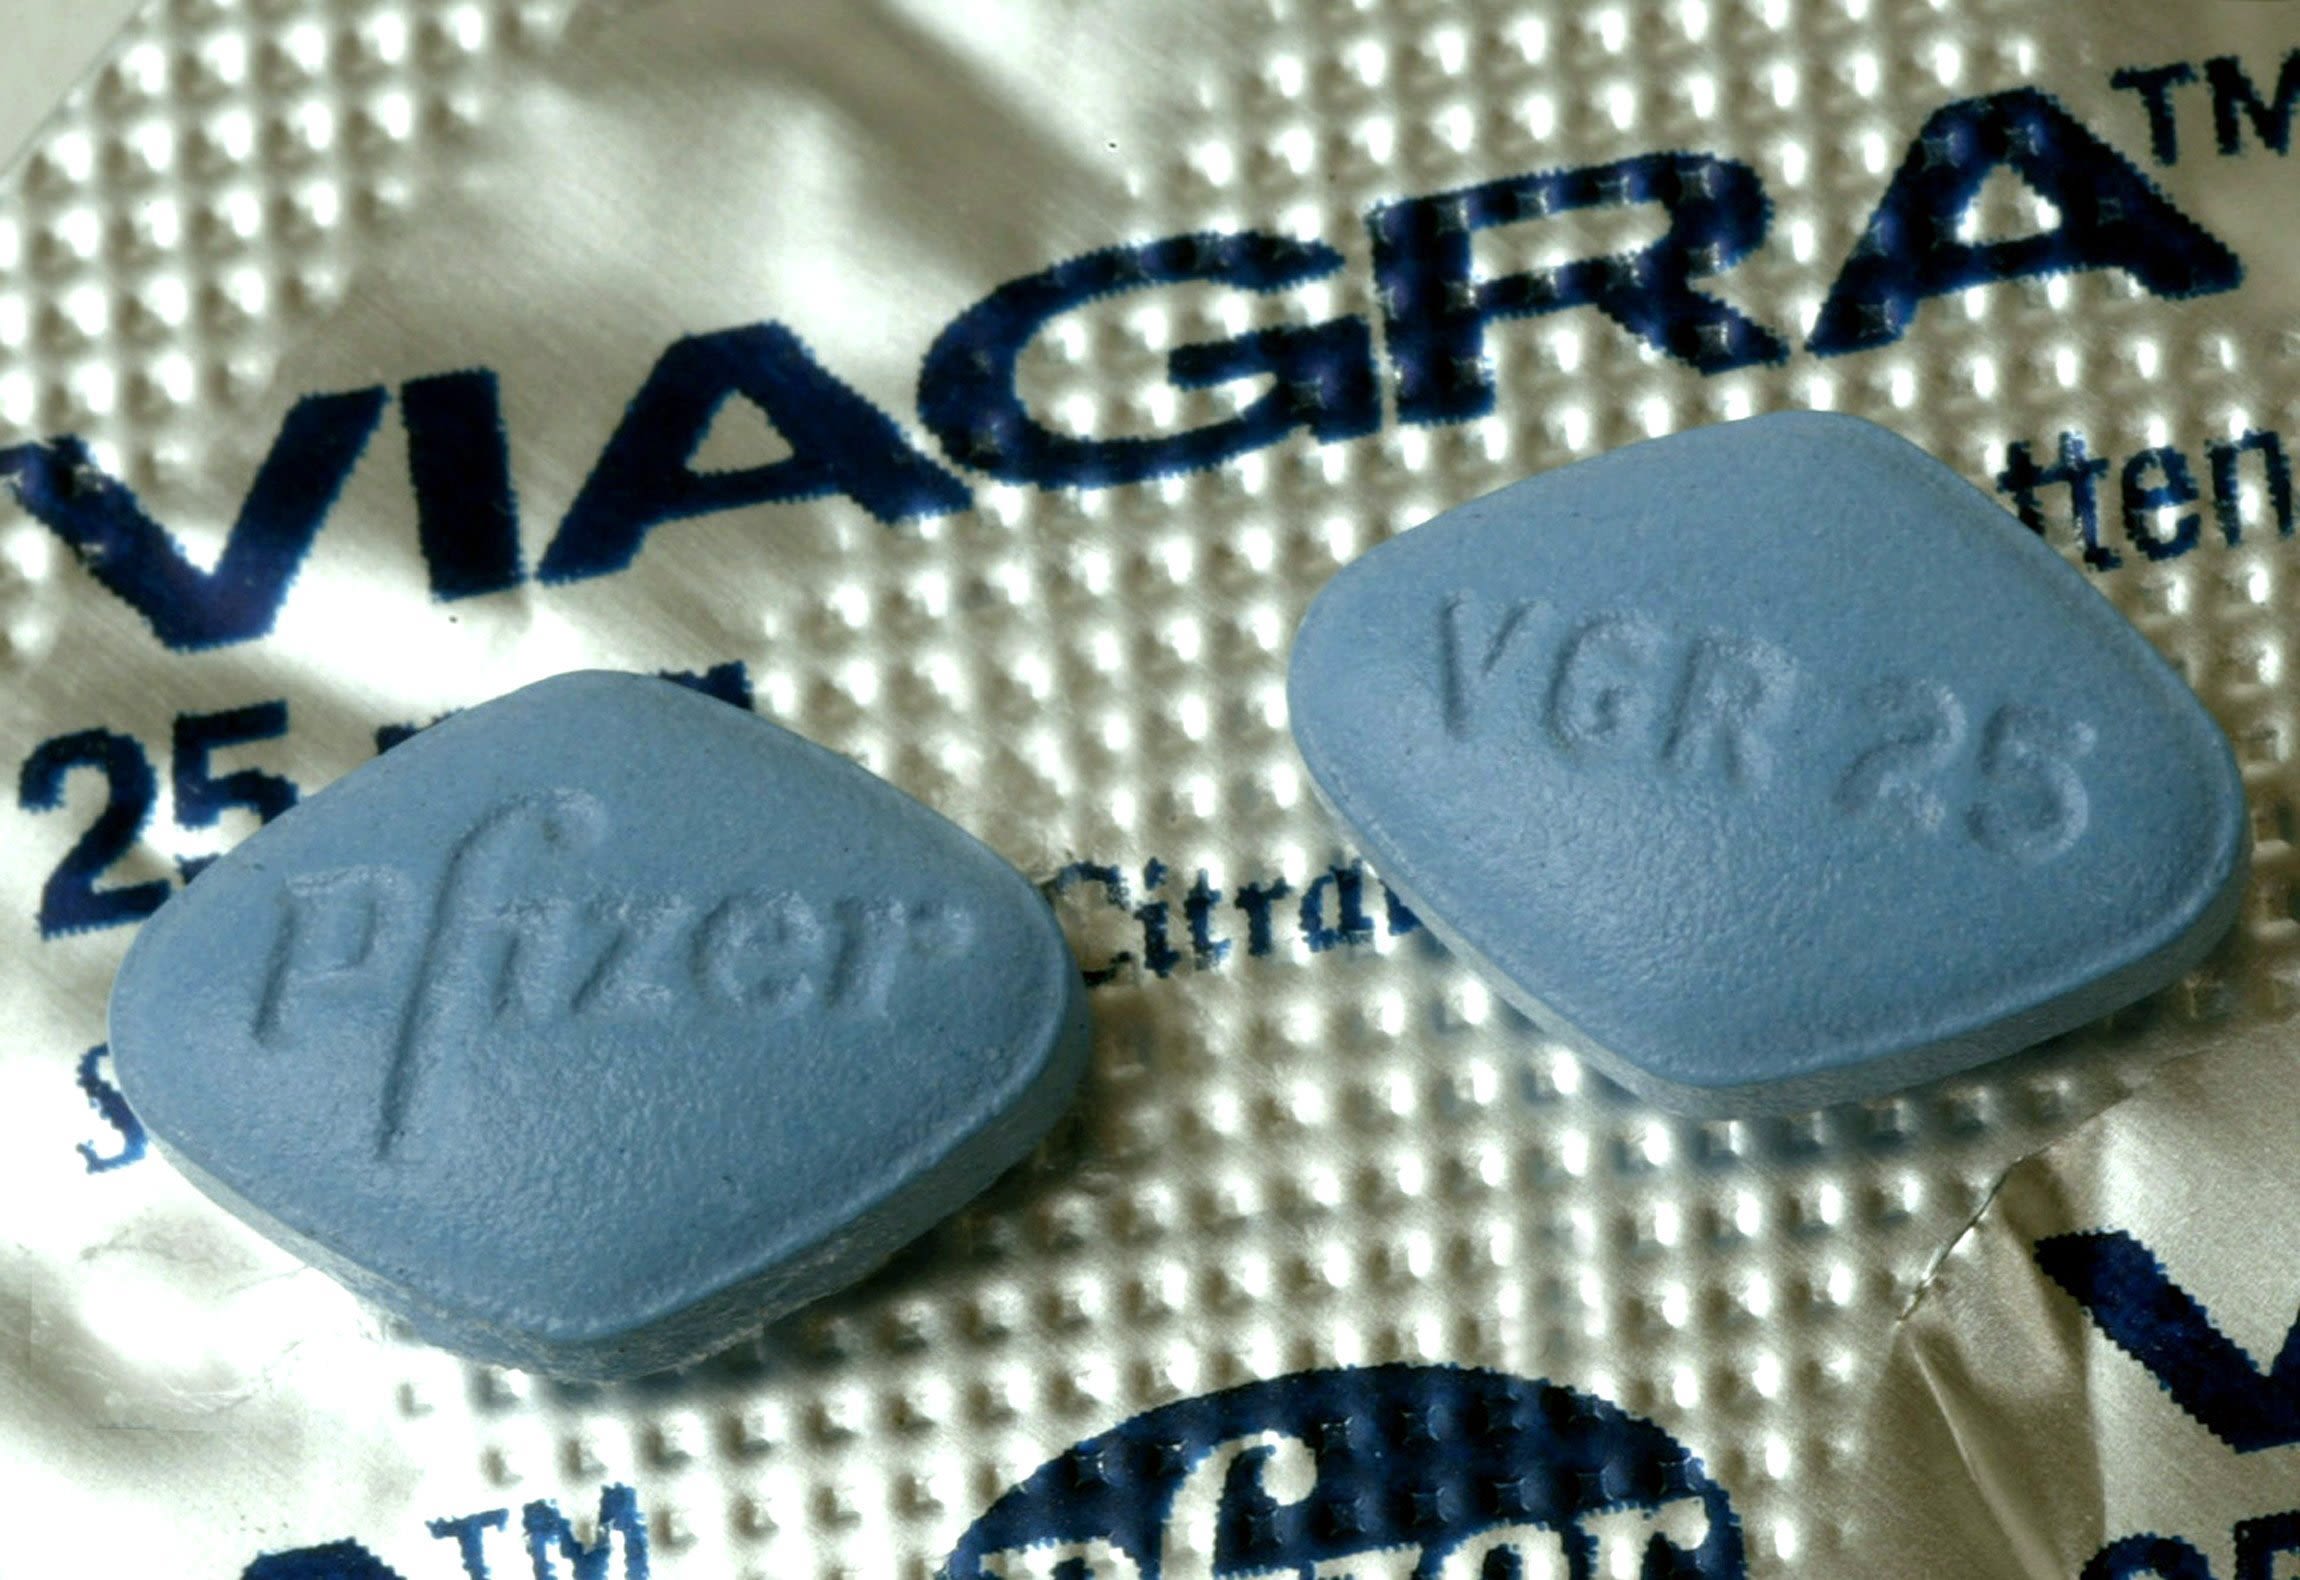 Viagra: The little blue pill that could | CNN